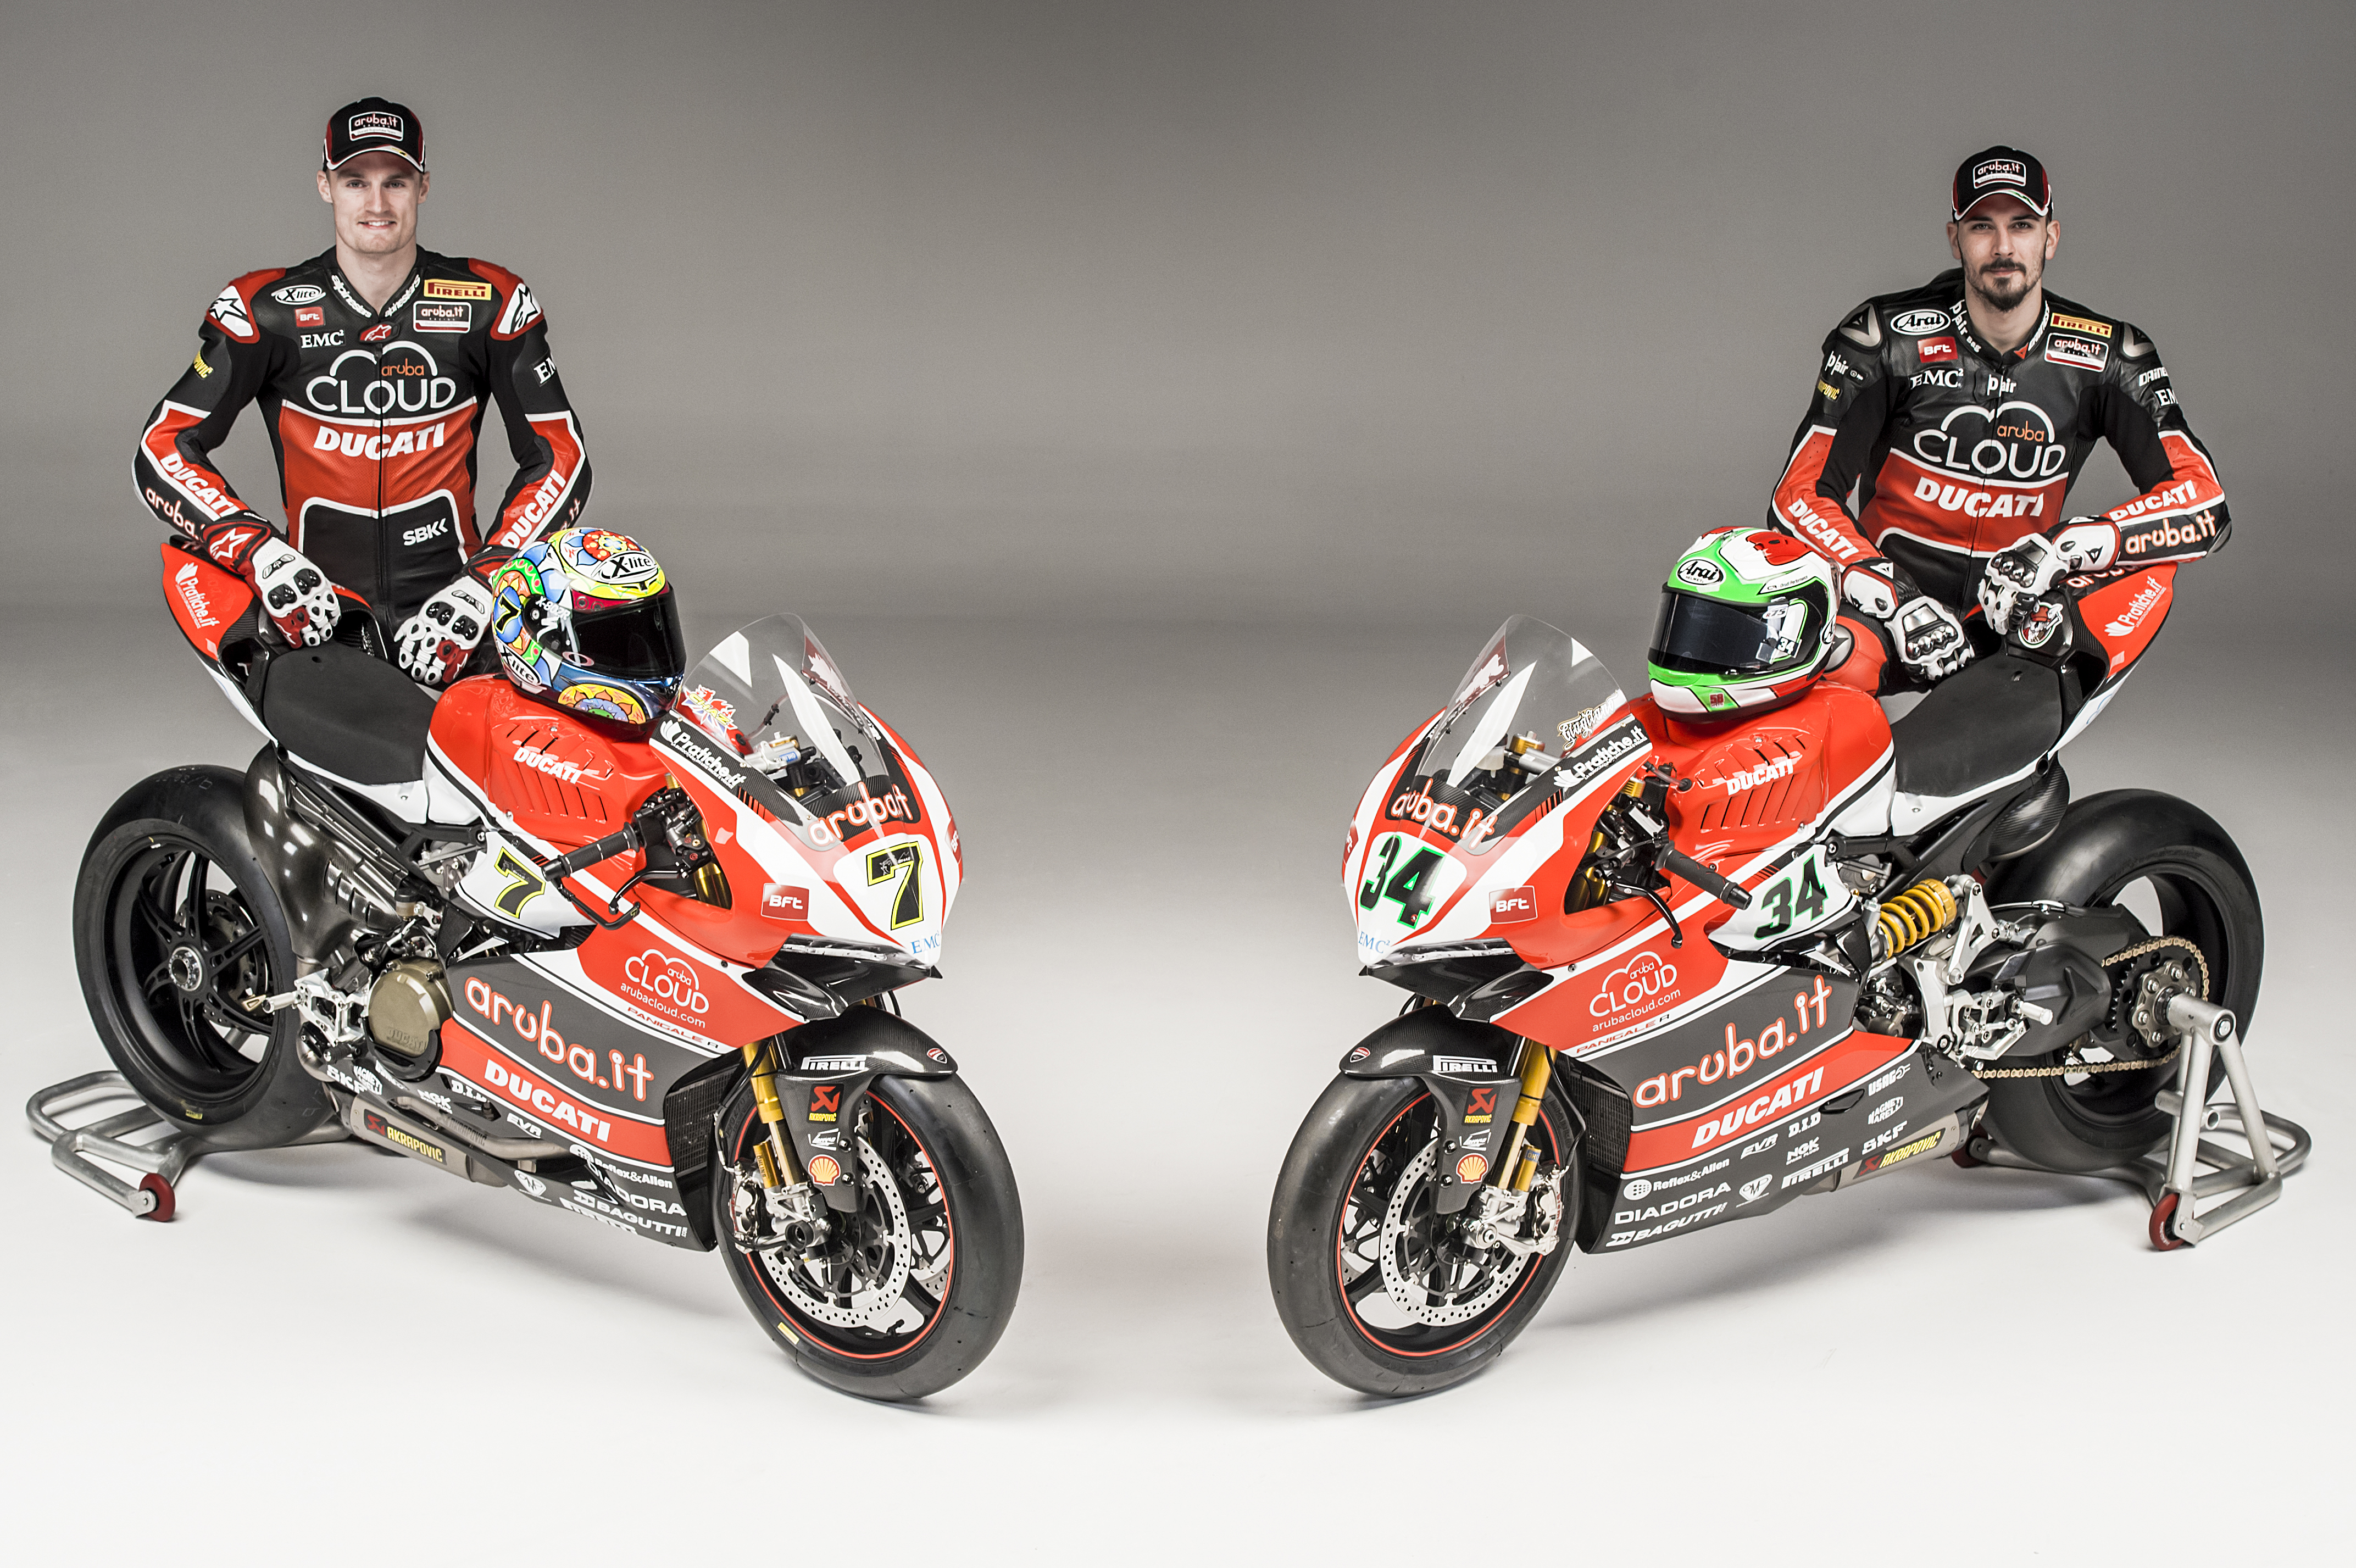 Ducati's 2015 WSBK livery revealed